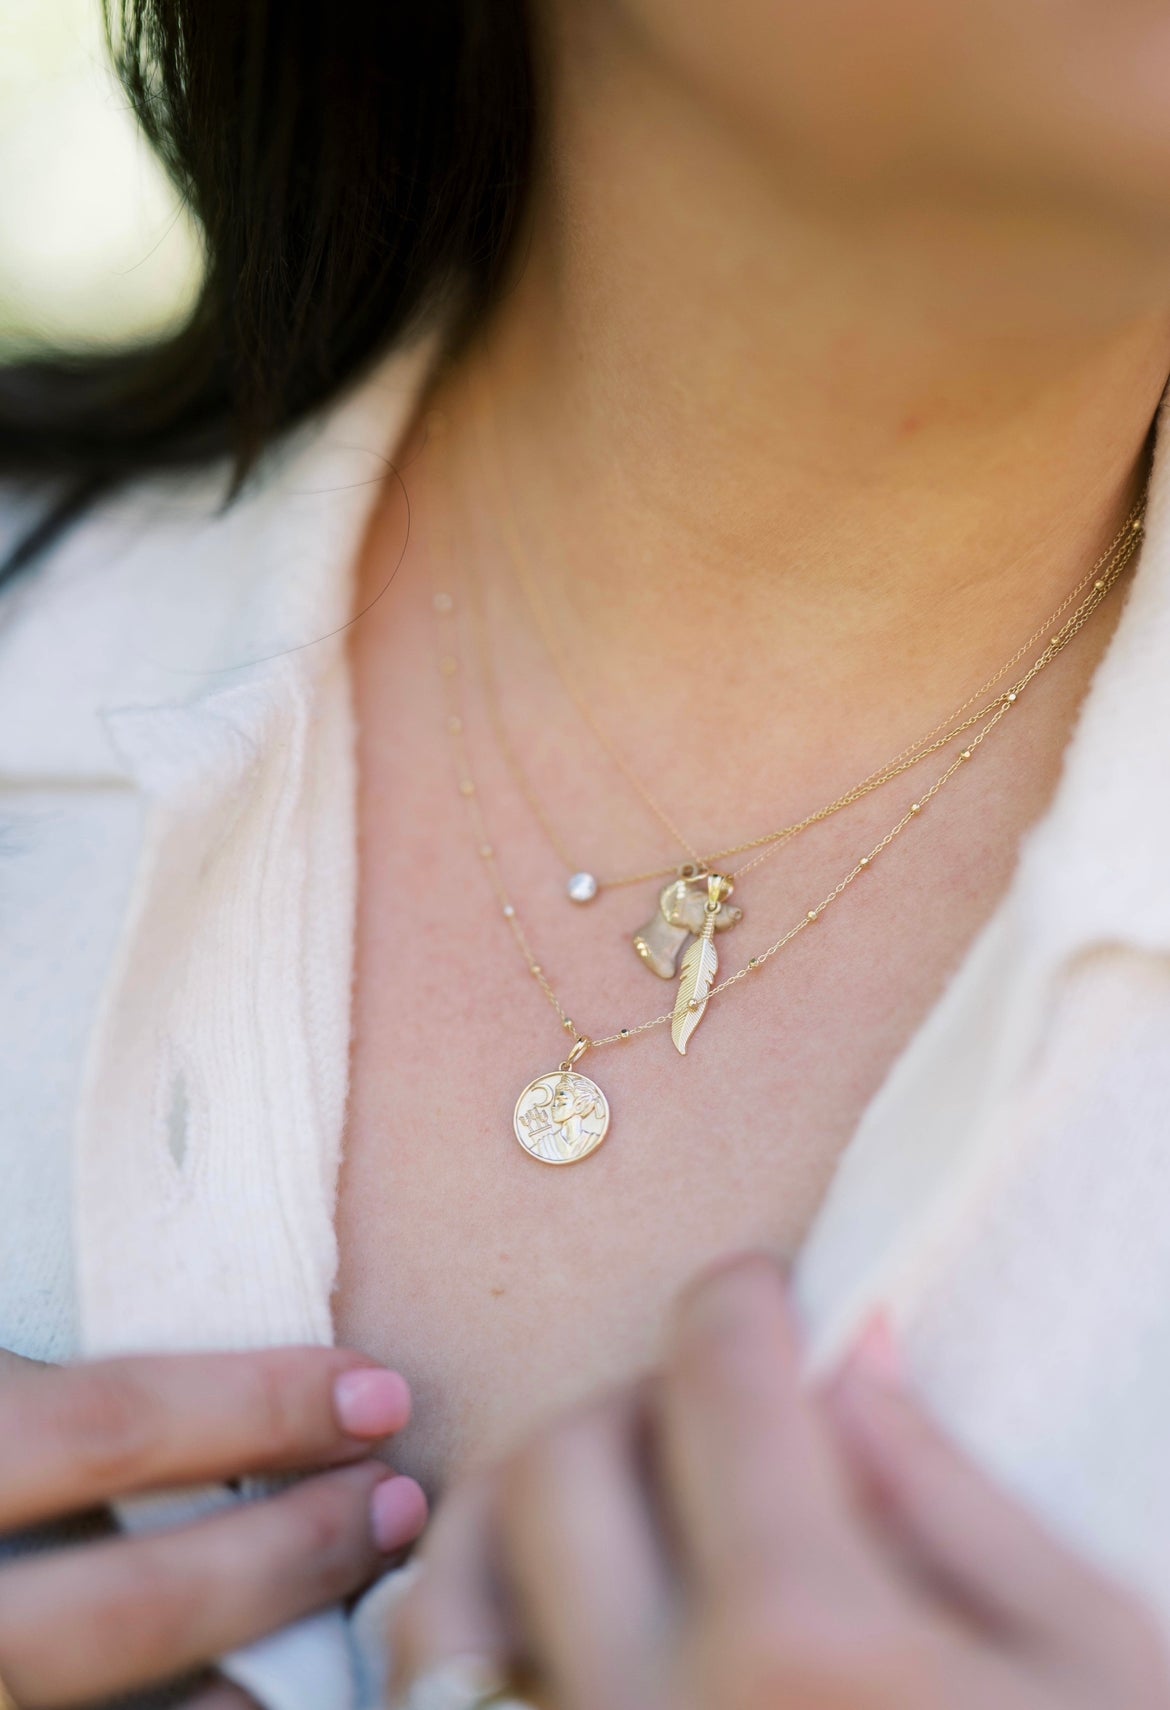 Artemis coin necklace